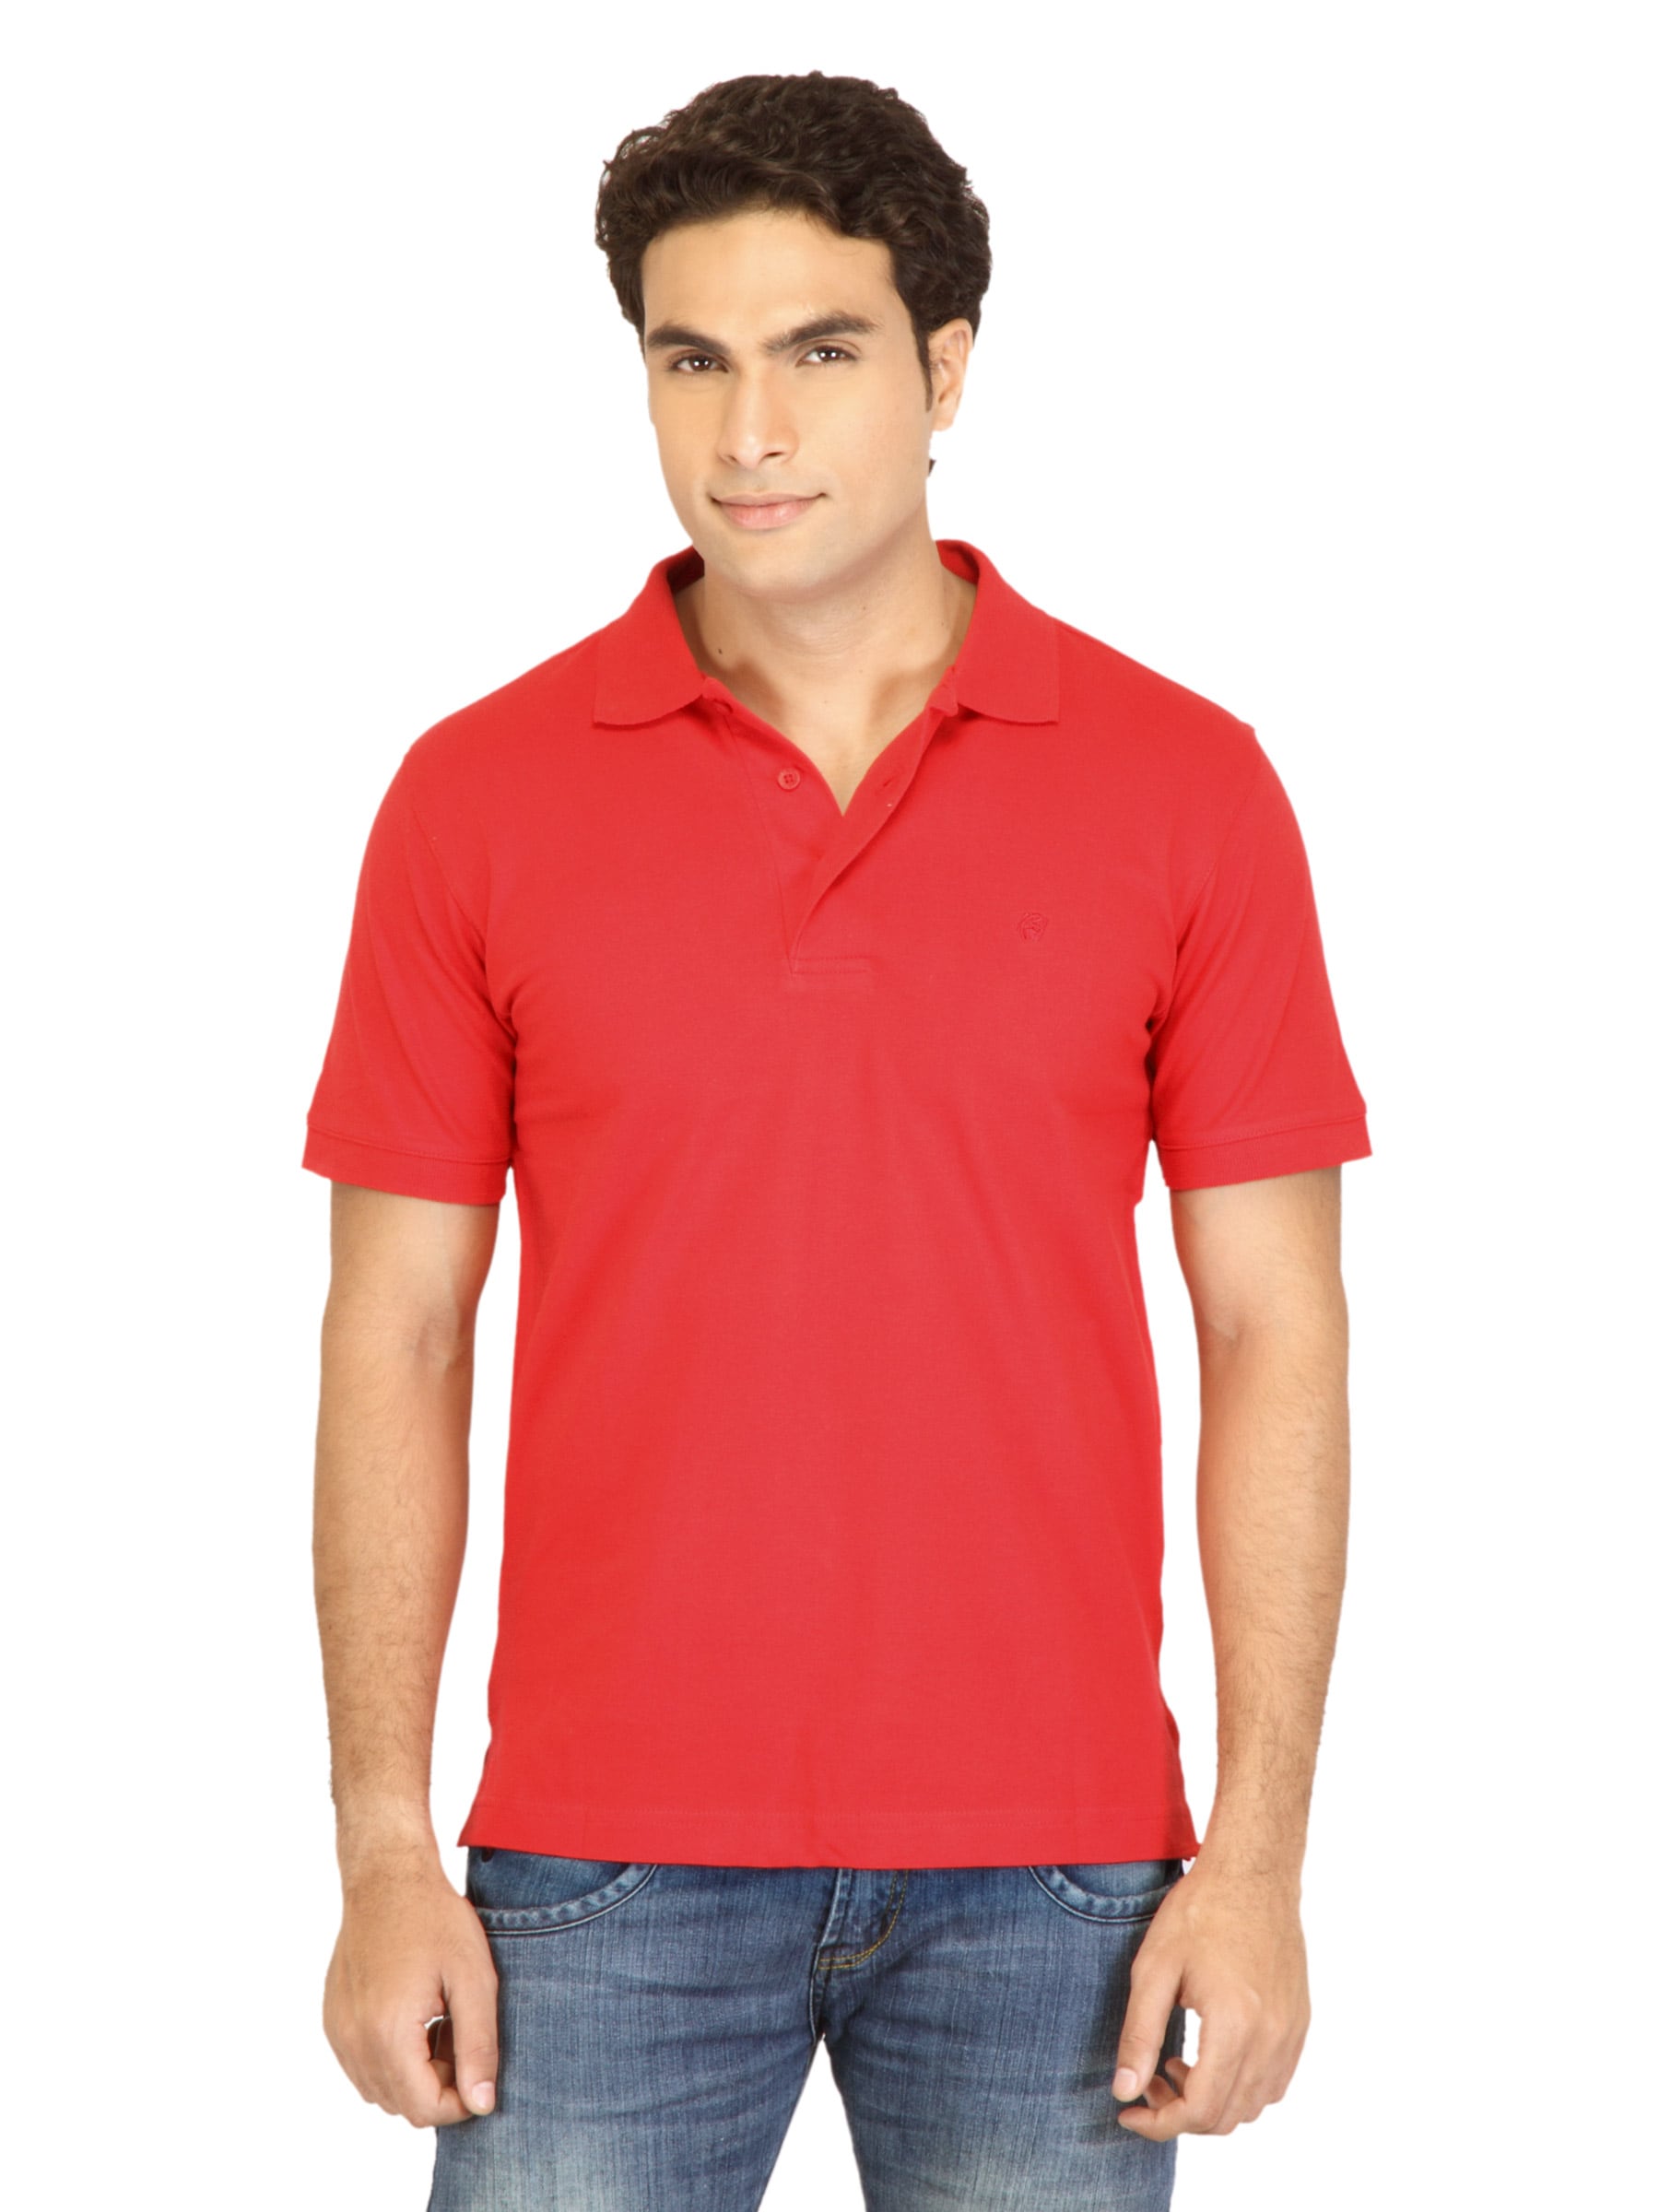 Facit Men Polo Tee Red Tshirt